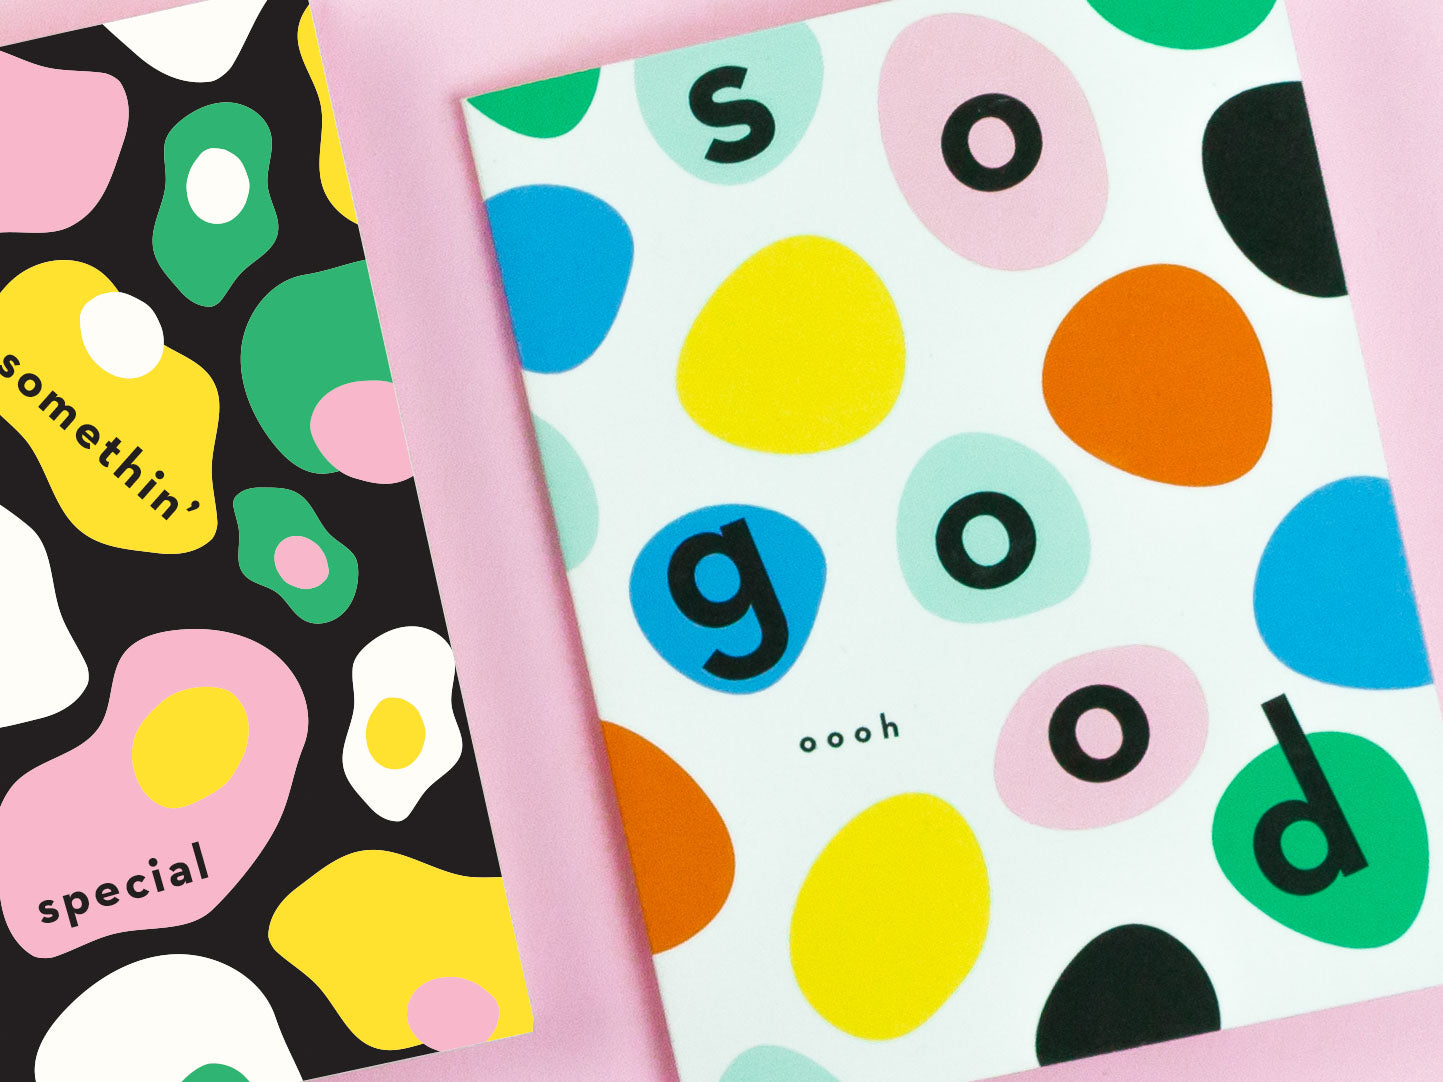 So Good colorful bouncing dots thank you card or congrats card. Made in USA by @mydarlin_bk